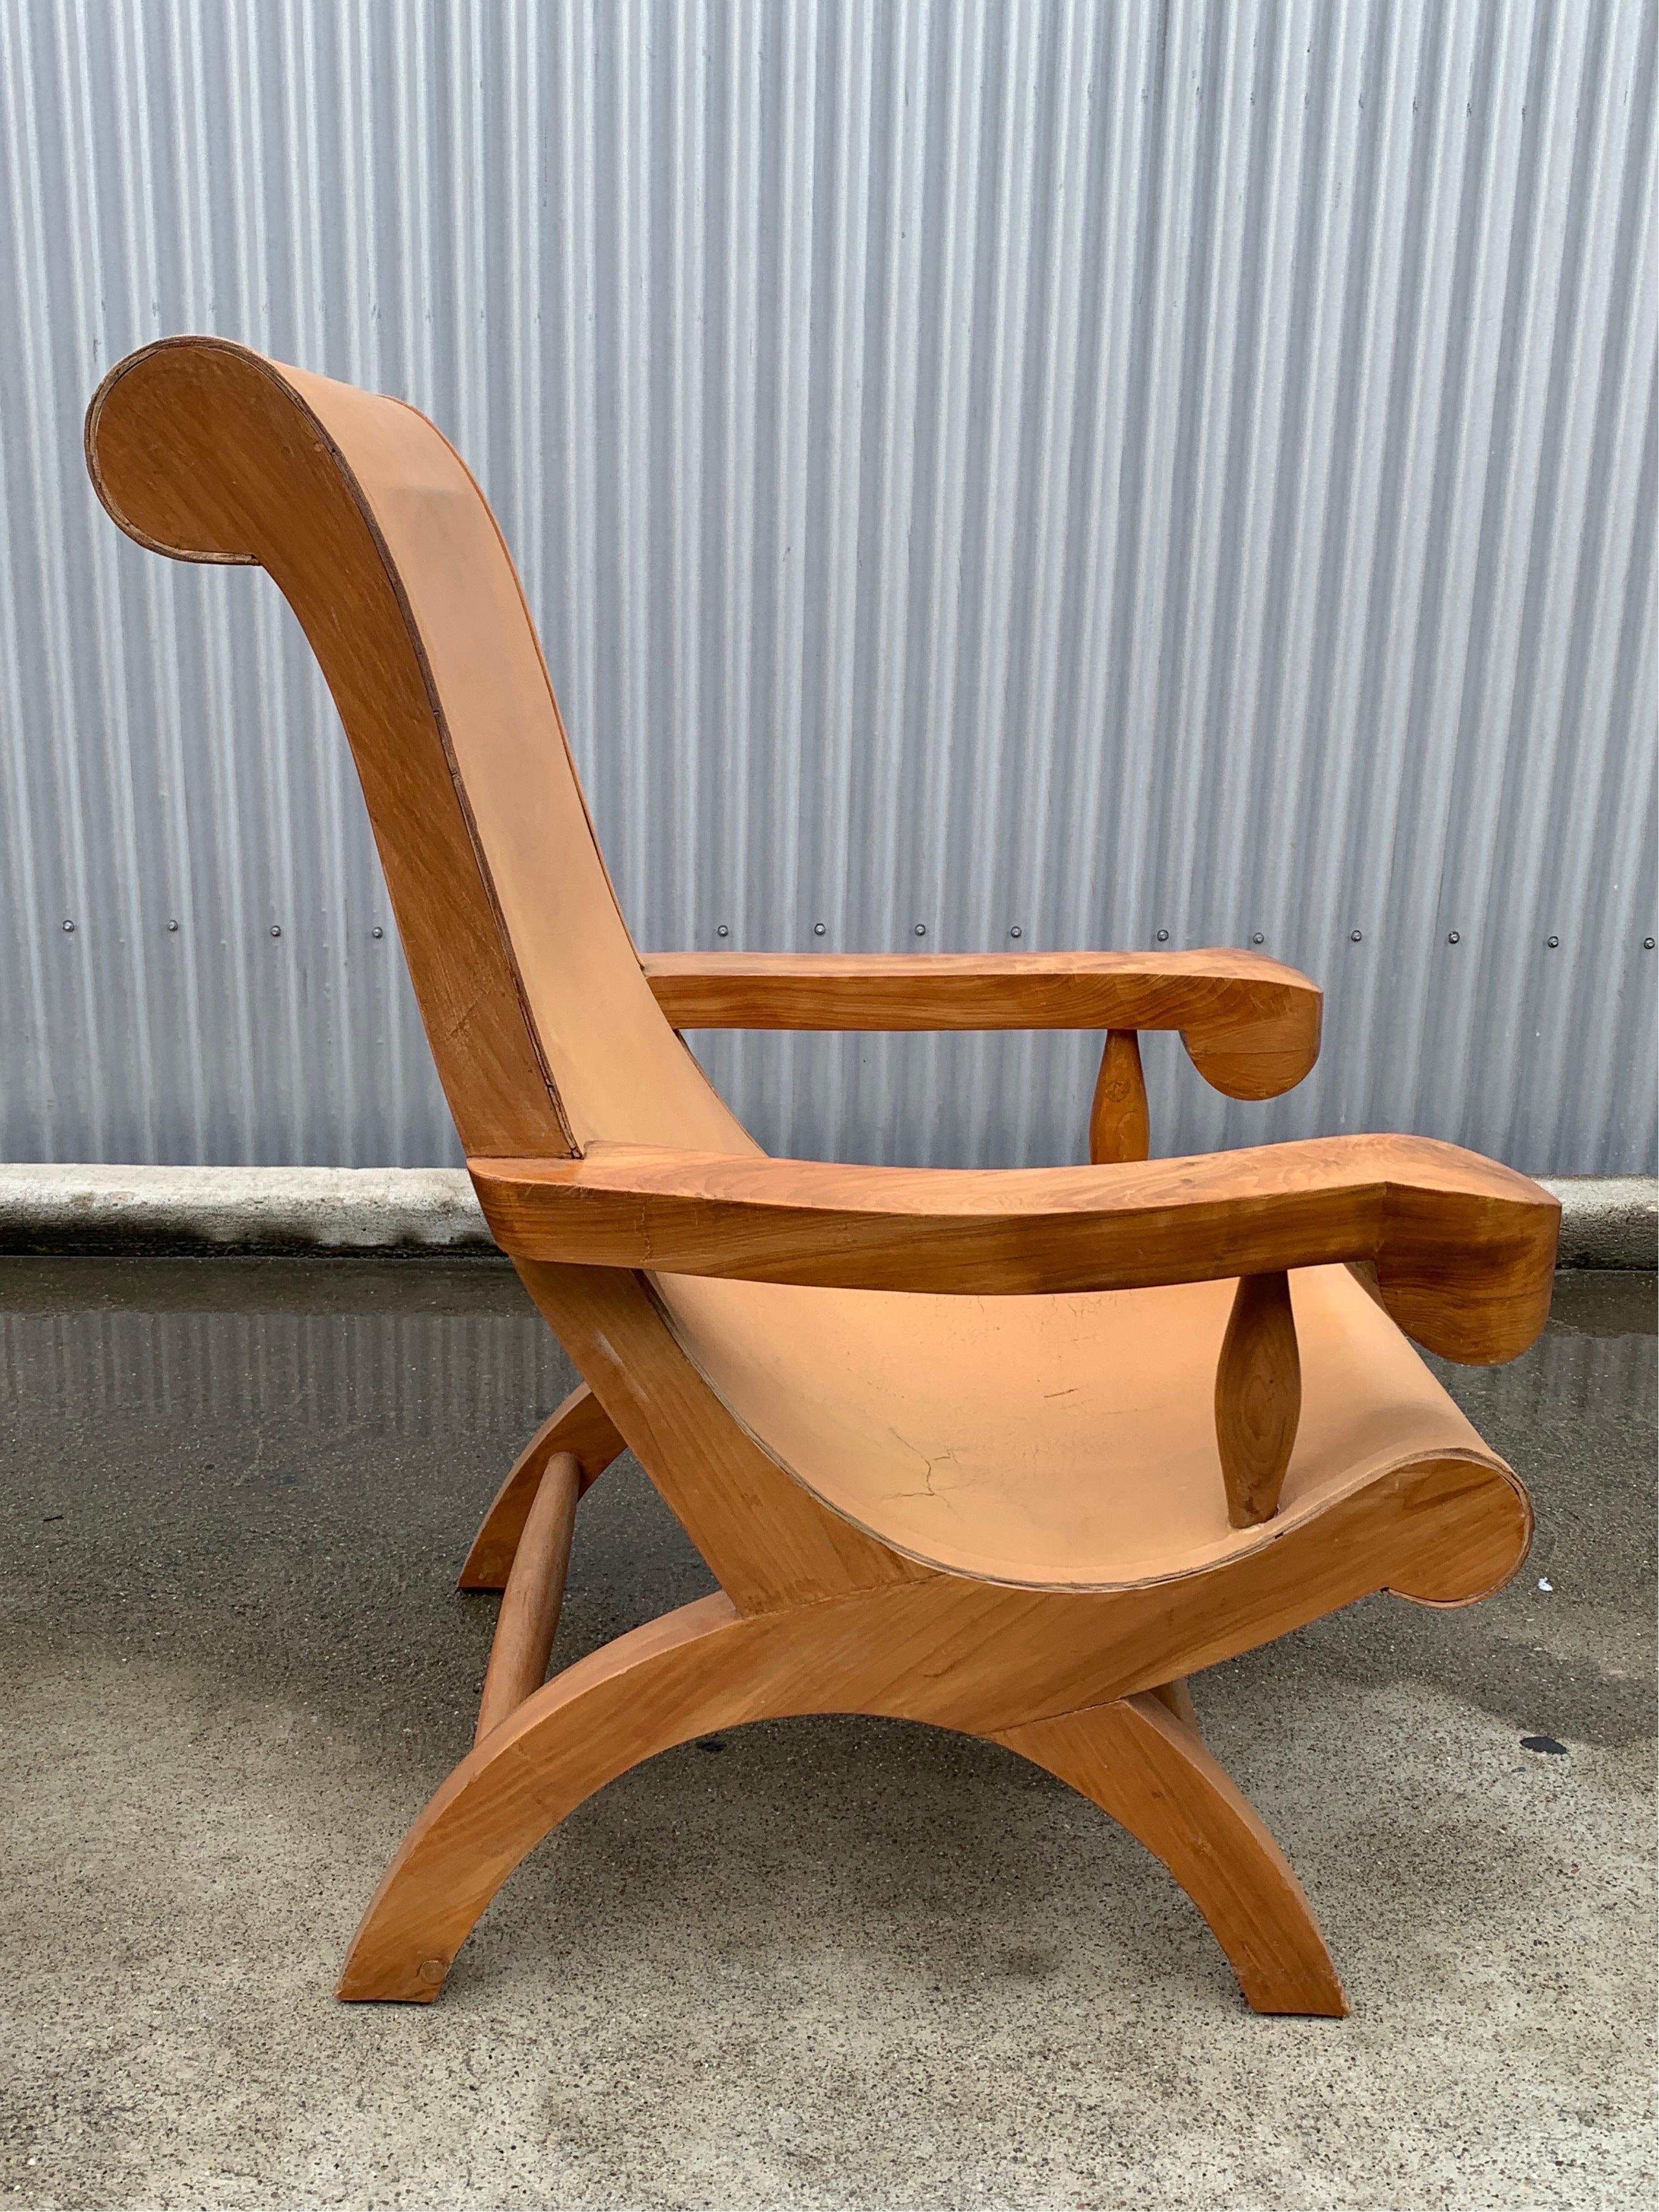 Organic Modern Clara Porset Lounge Chairs For Sale